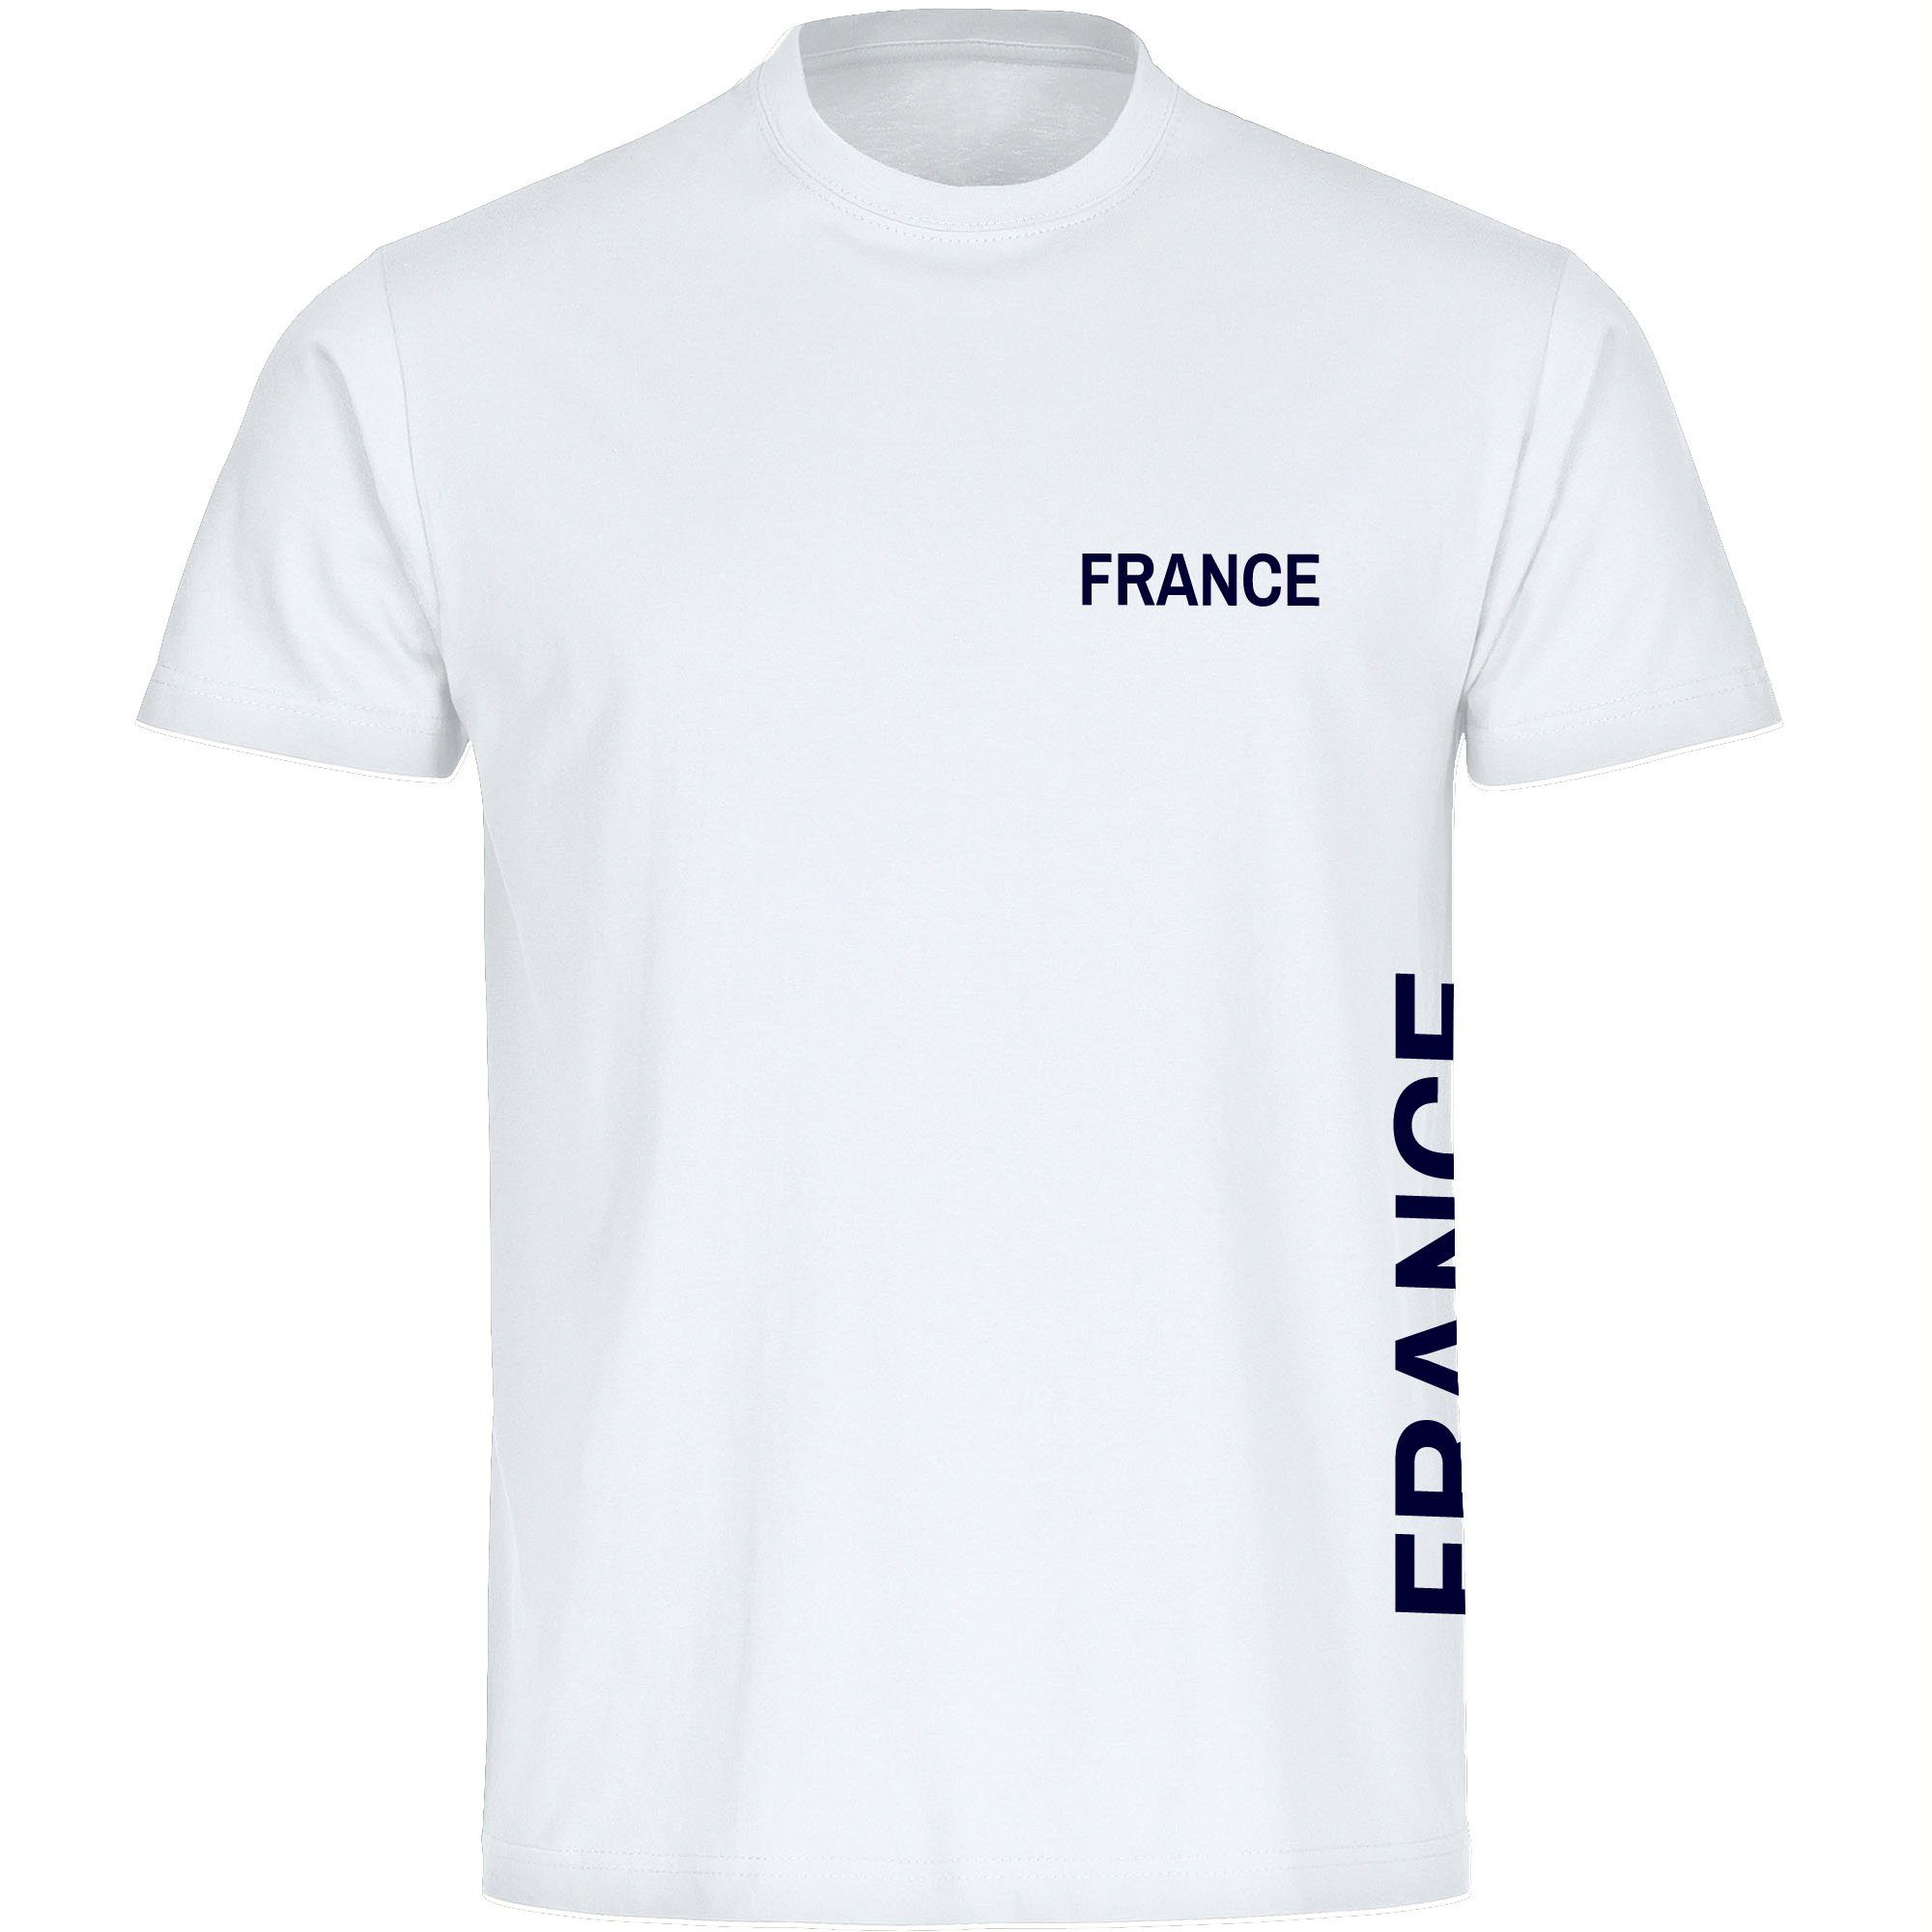 multifanshop T-Shirt Kinder France - Brust & Seite - Jungen Mädchen Shirt Fanartikel